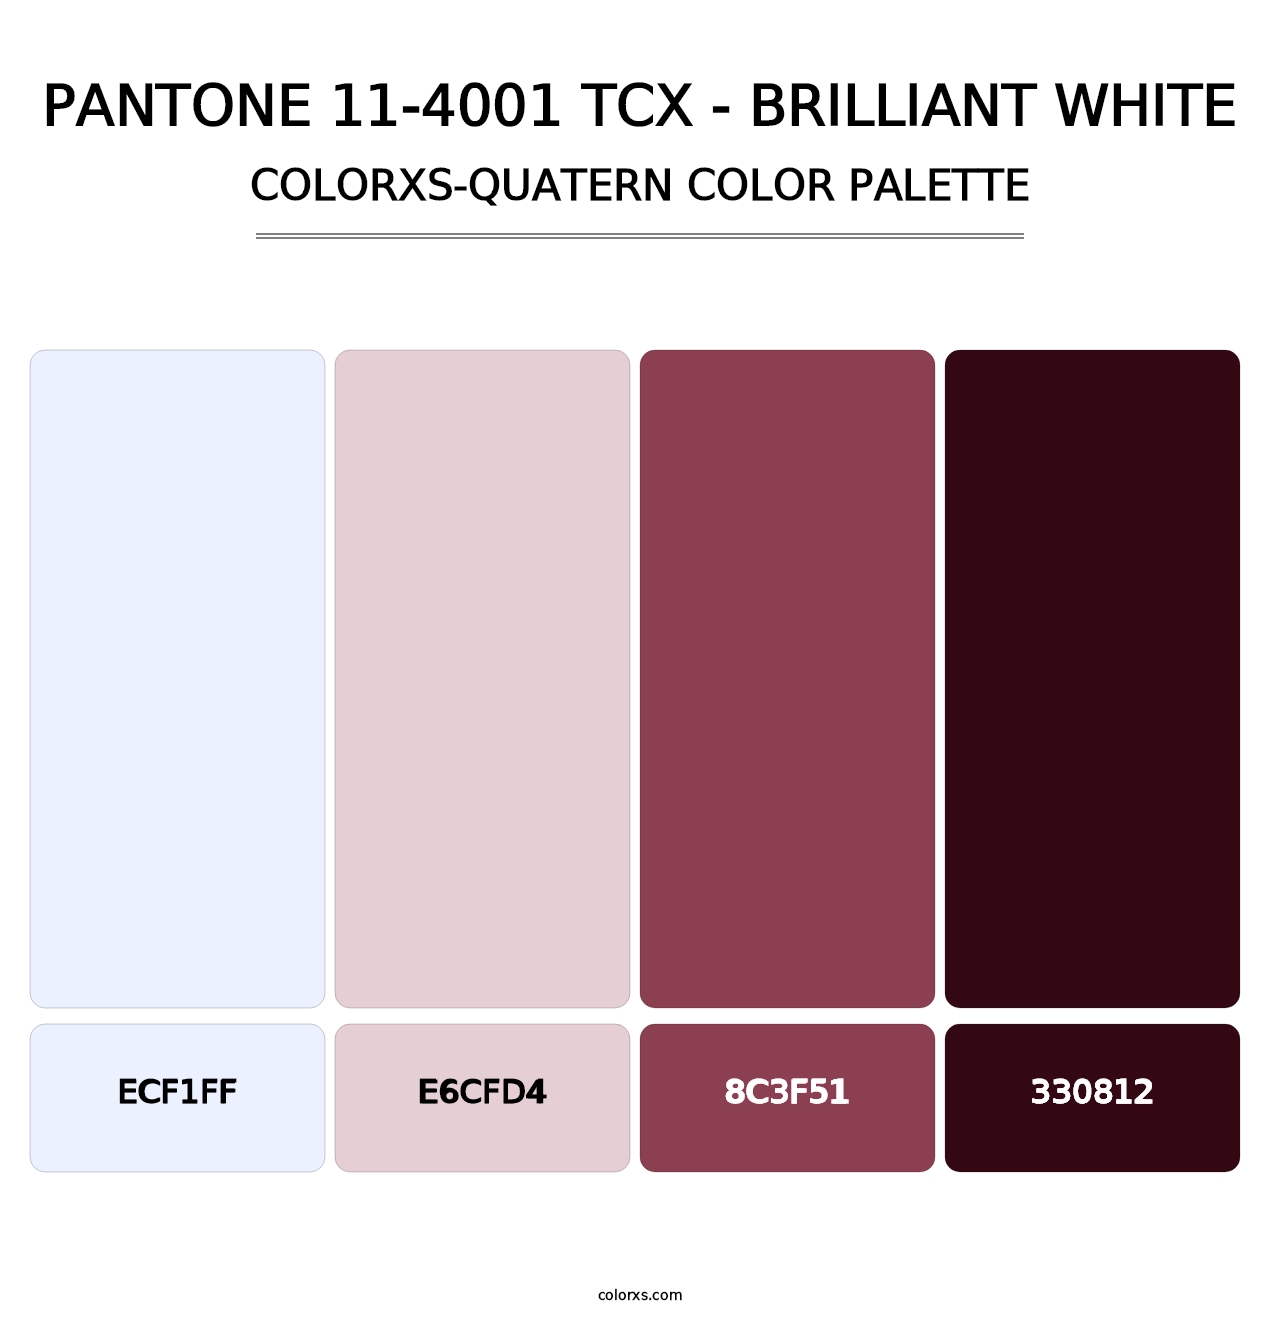 PANTONE 11-4001 TCX - Brilliant White - Colorxs Quatern Palette